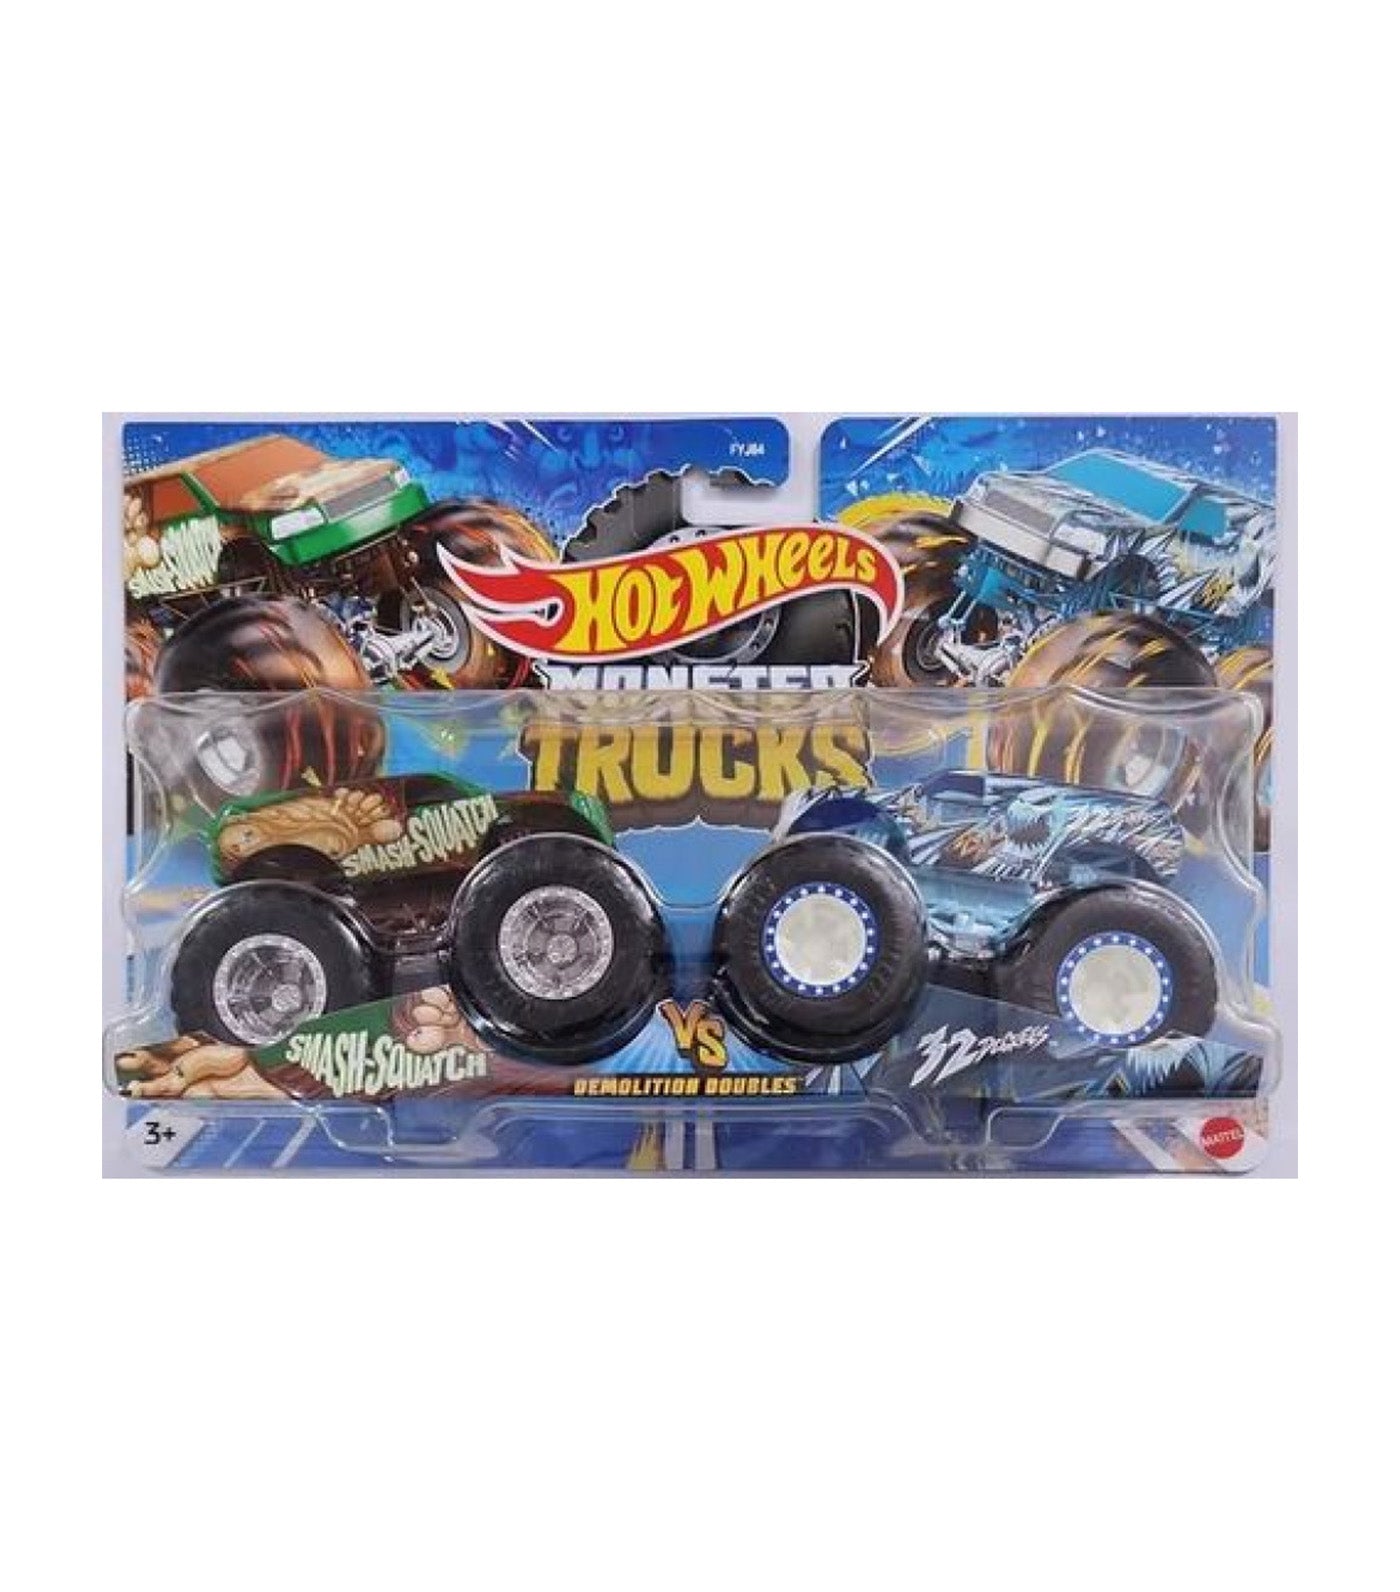 Hot Wheels Monster Trucks Arena Smashers & Truck Set w/2 Free Diecast Cars!